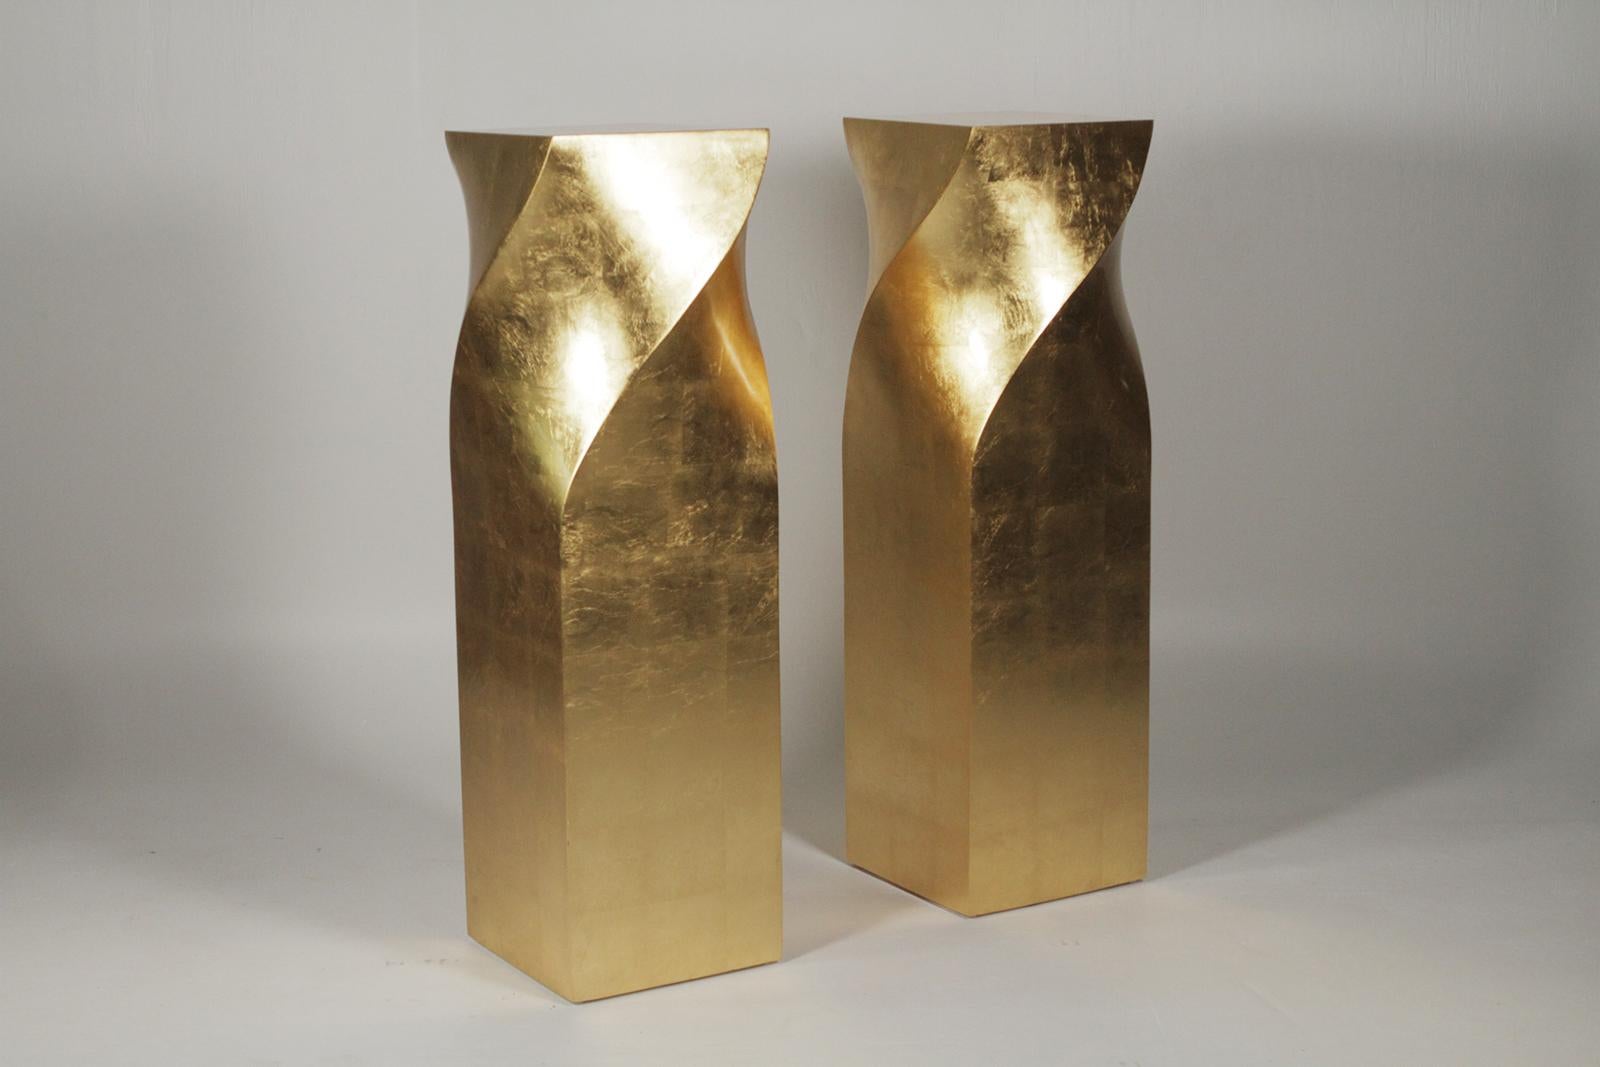 Pair of monumental Mid-Century Modern gold gilt pedestals 50.5” H x 18.5” W
Top of pedestal 14